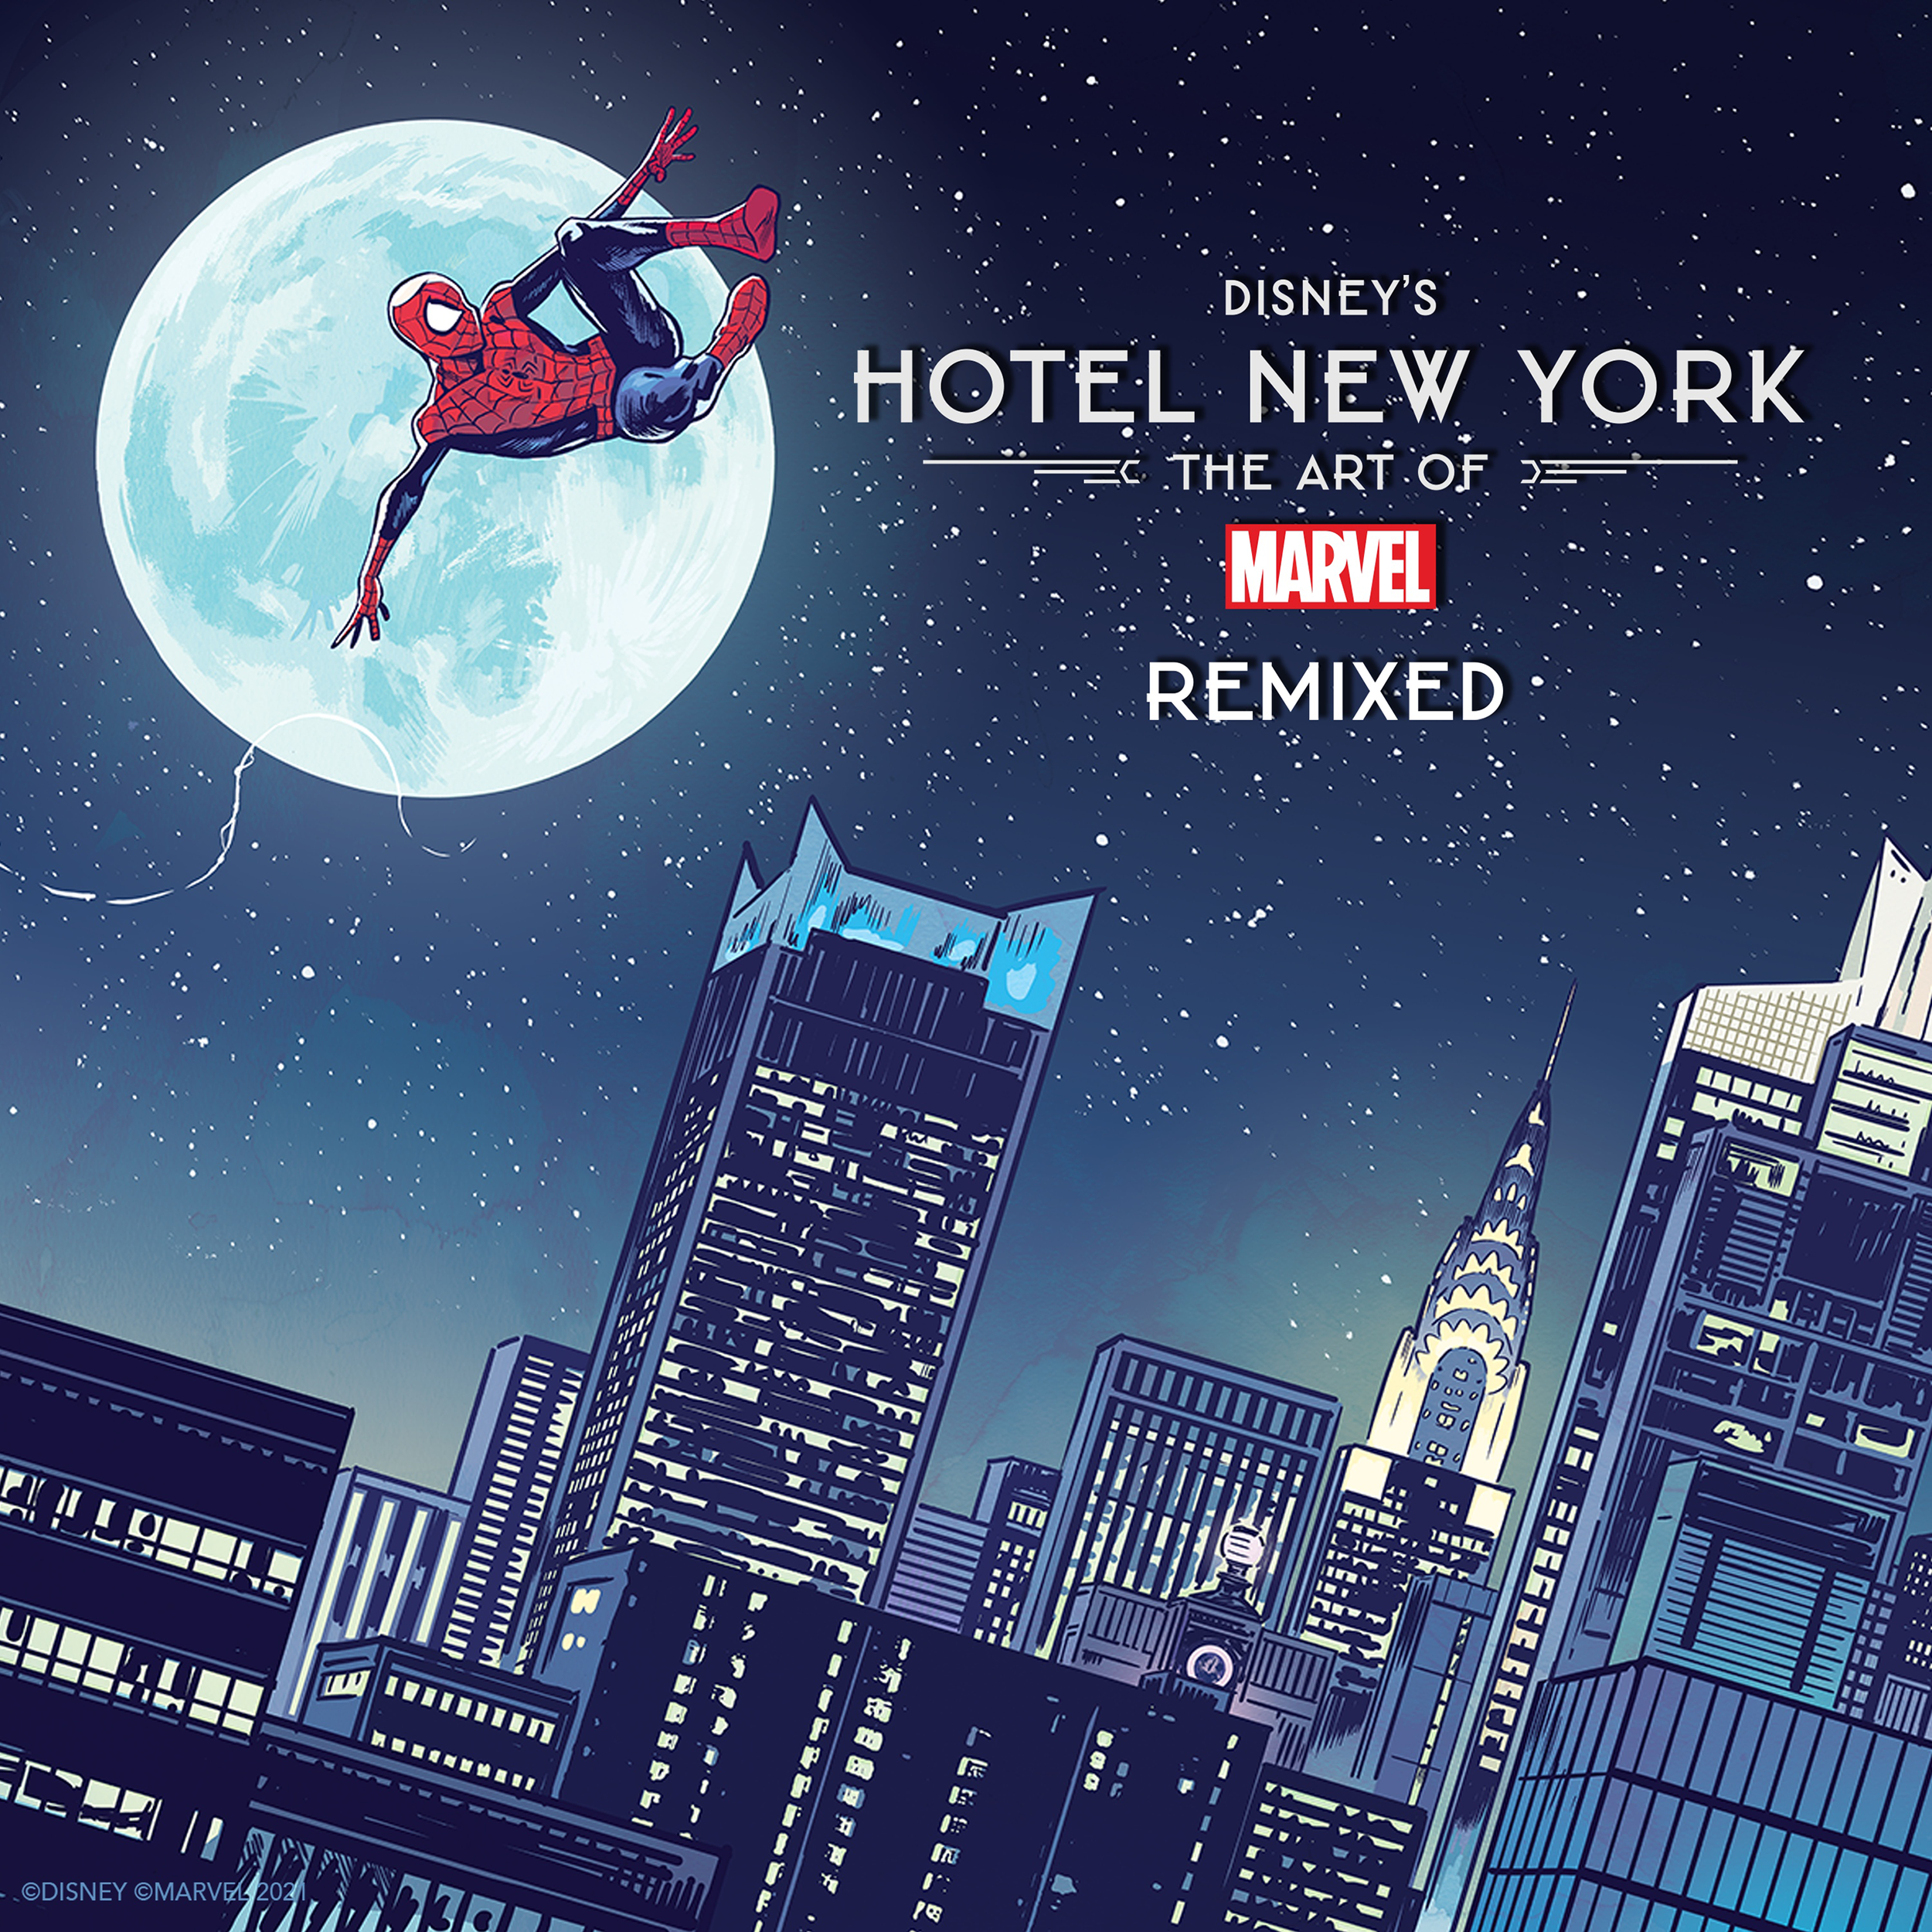 Disney’s Hotel New York – The Art of Marvel Remixed Album Release.